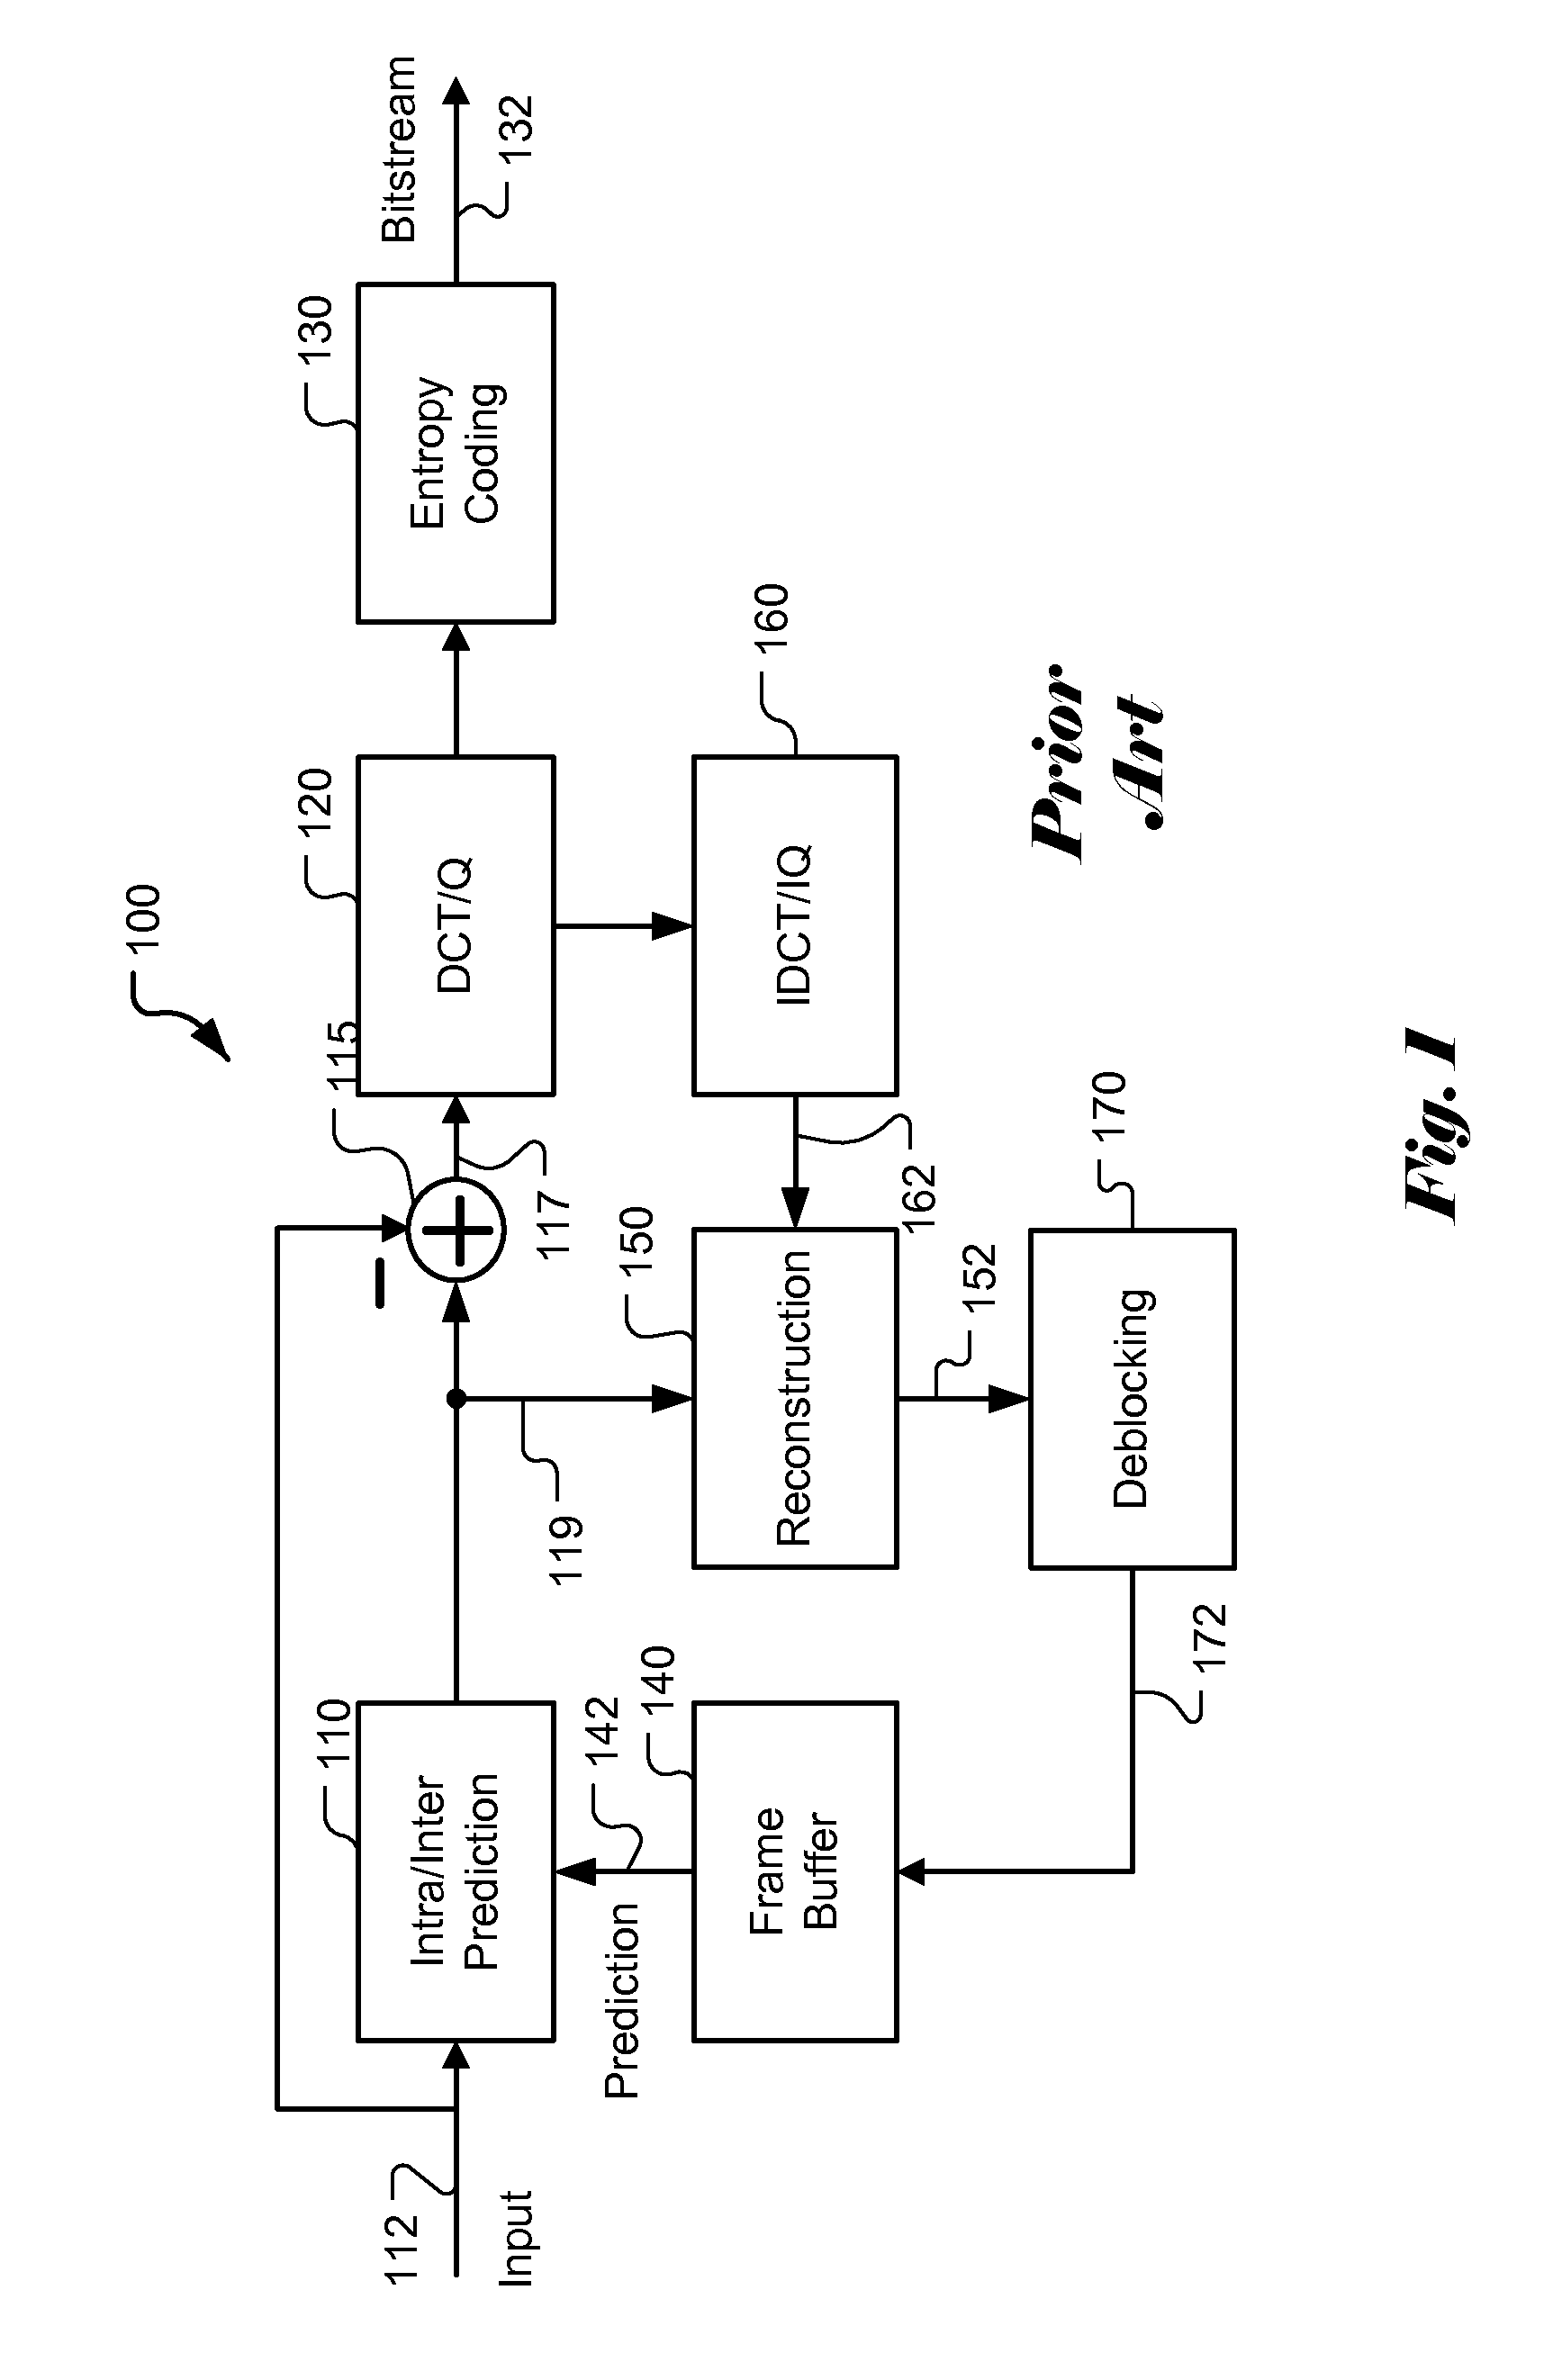 Method and apparatus of adaptive loop filtering